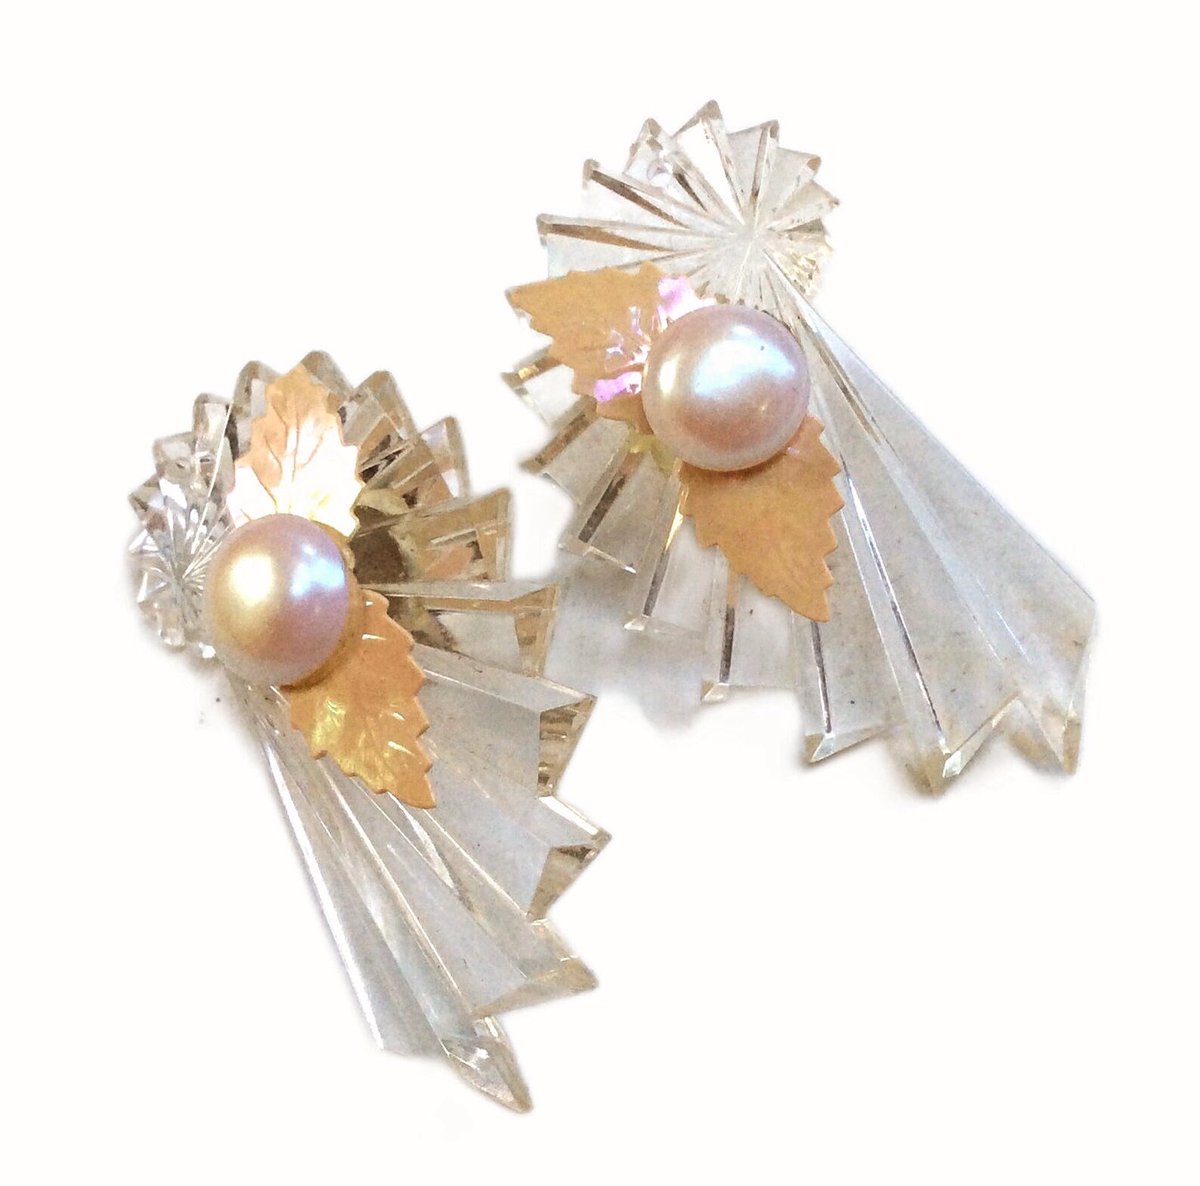 CA$35.00
Vintage #carvedlucite #artdeco #iridescentleaf #pink #earringsforsale #prom 
CrowVanity Jewelry #etsy #etsycanada #etsyaccessories #etsyvintage #etsyjewelry #jewelryforsale #mothersdaygift #gothaesthetic #wardrobestylist etsy.com/ca/listing/172…